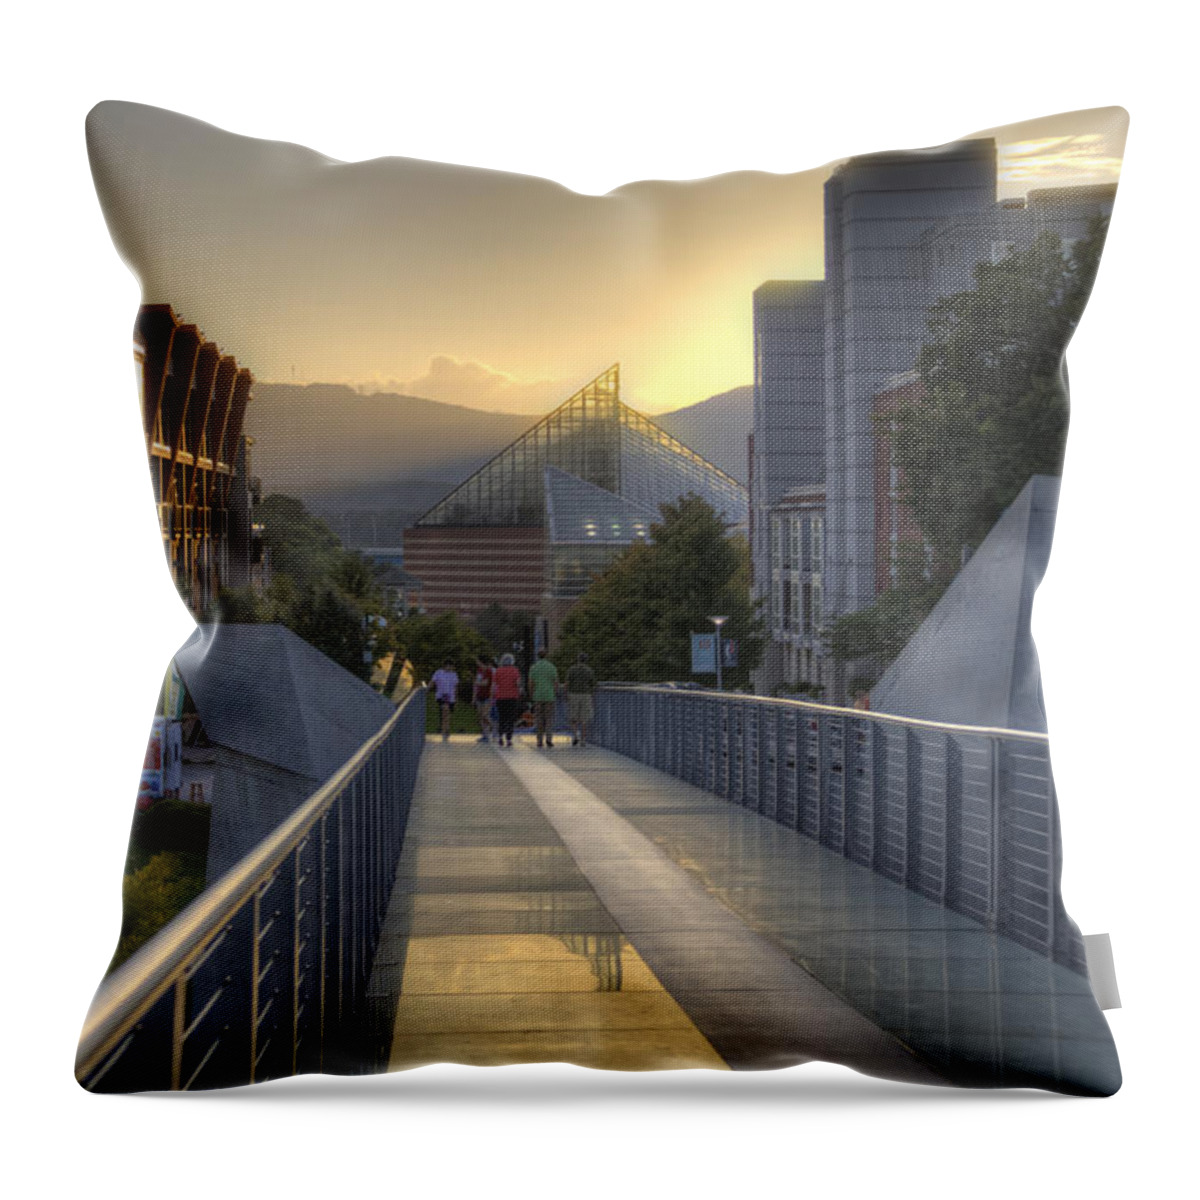 Glass Bridge Throw Pillow featuring the photograph Glass Bridge by David Troxel